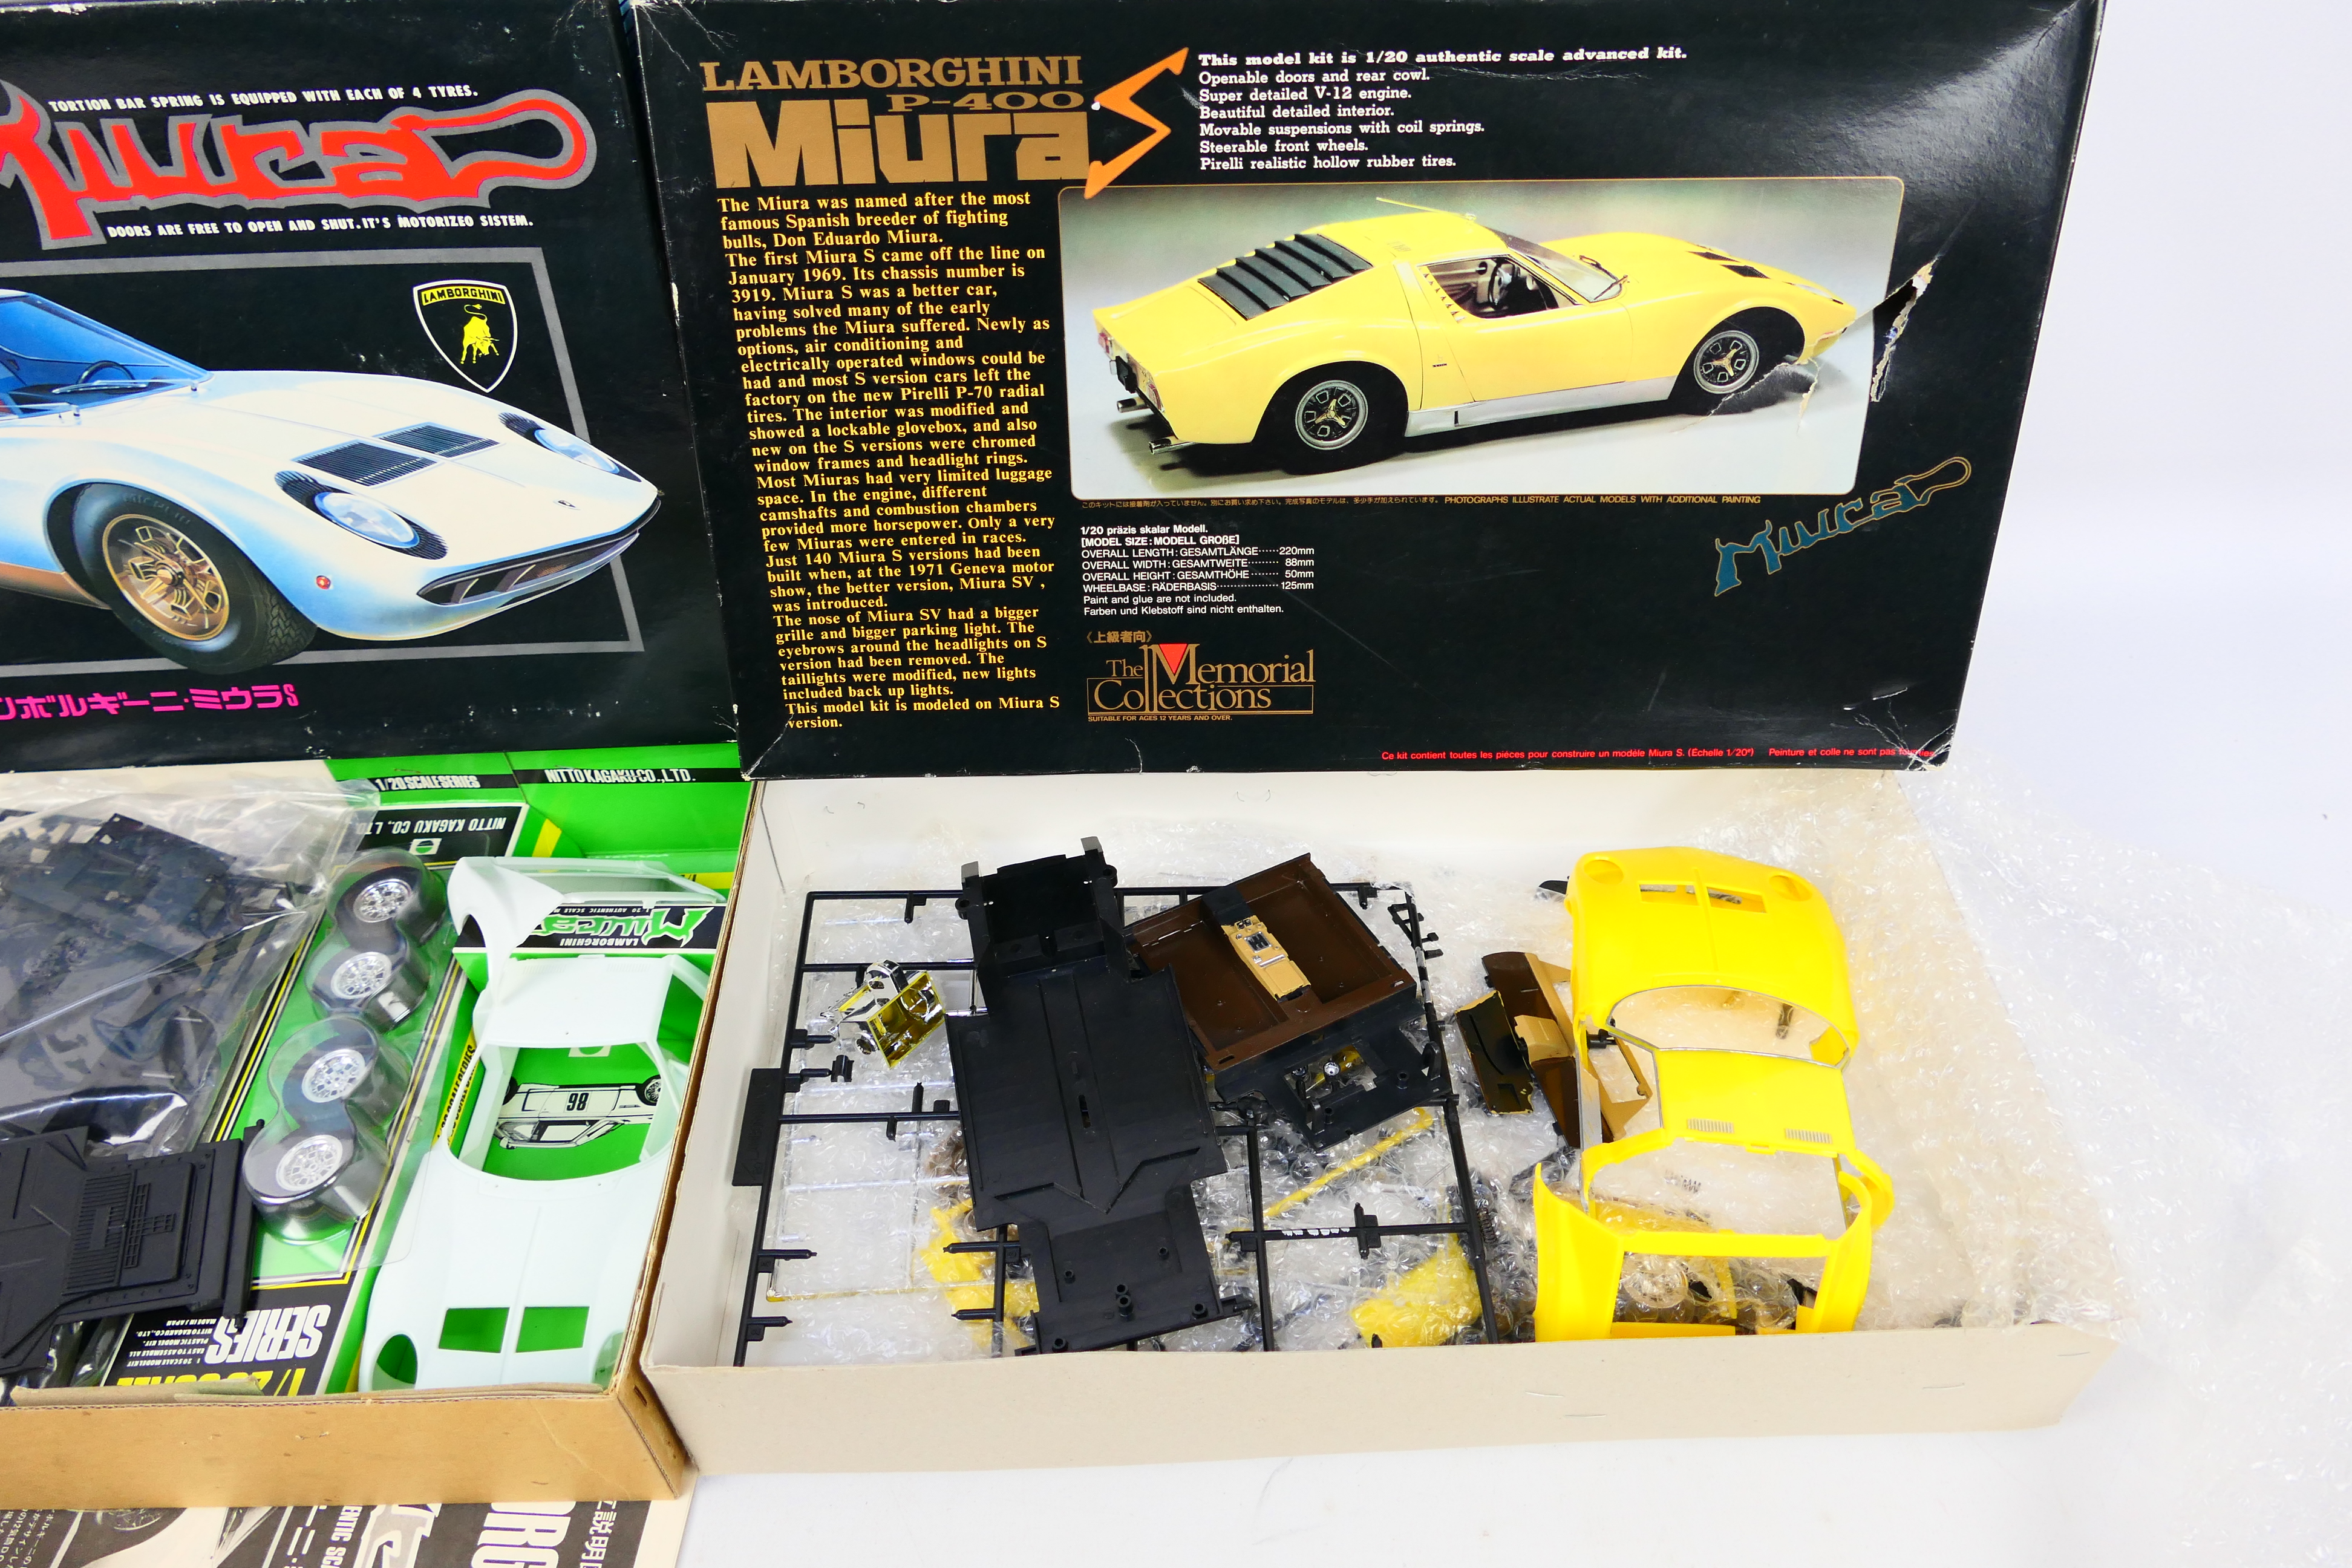 Nitto Kagaku - The Memorial Collections - Two boxed vintage Lamborghini Miura plastic model kits - Image 4 of 5